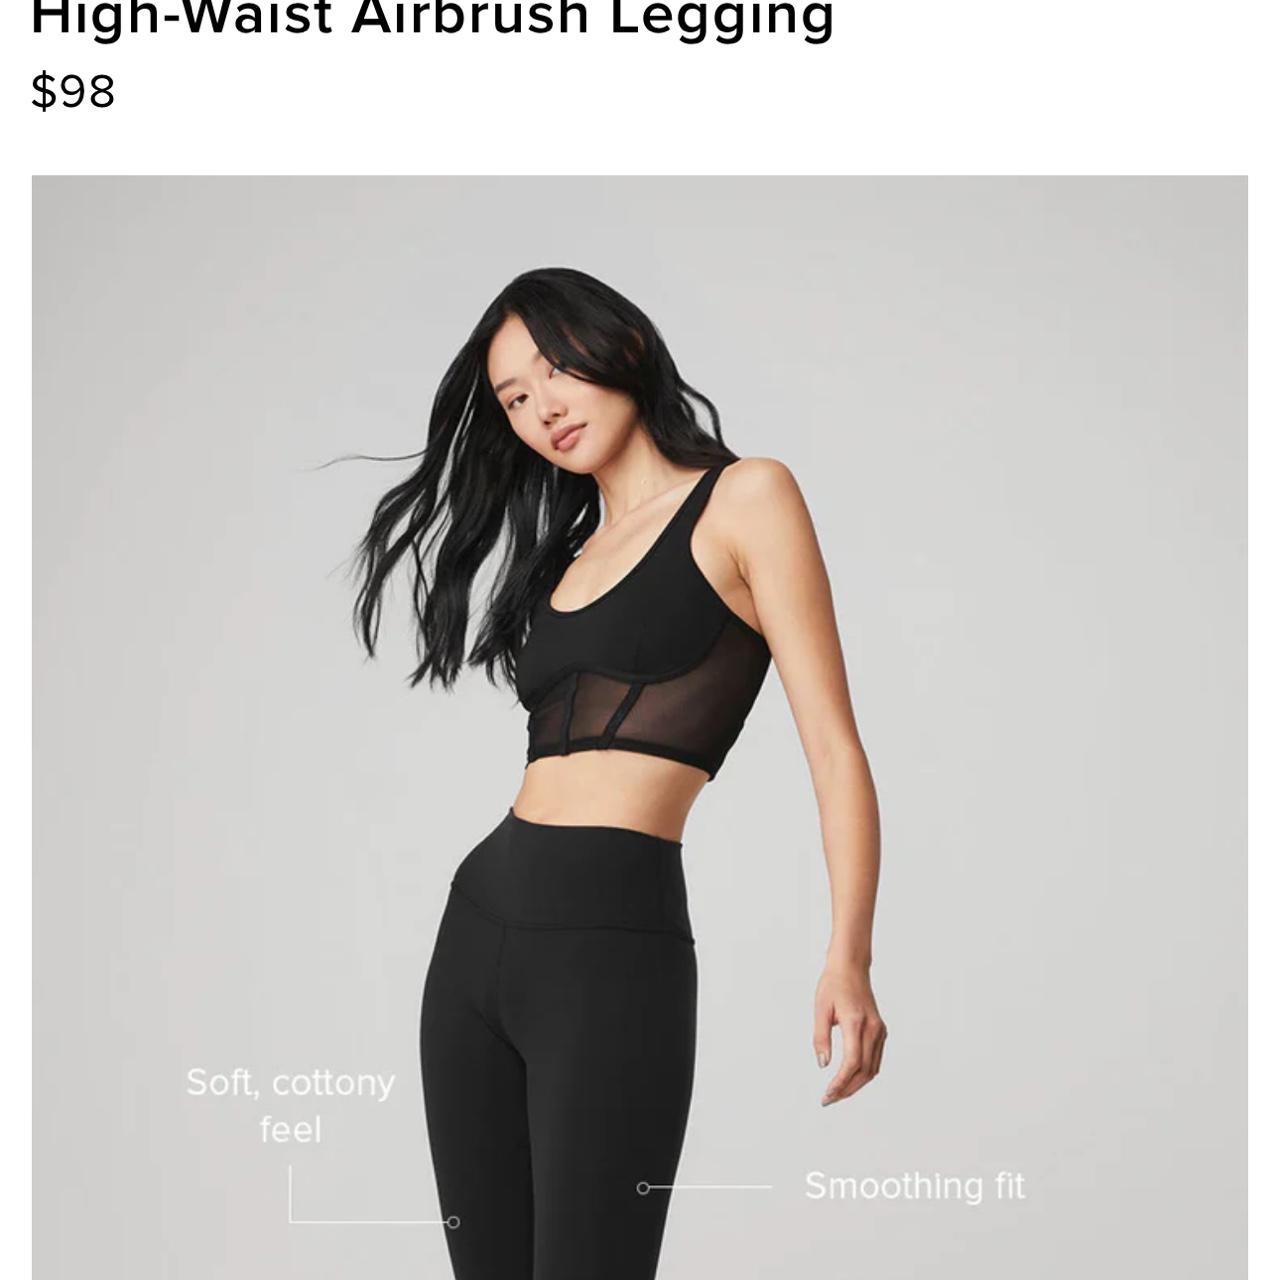 Alo Yoga High-Waist Airbrush Legging